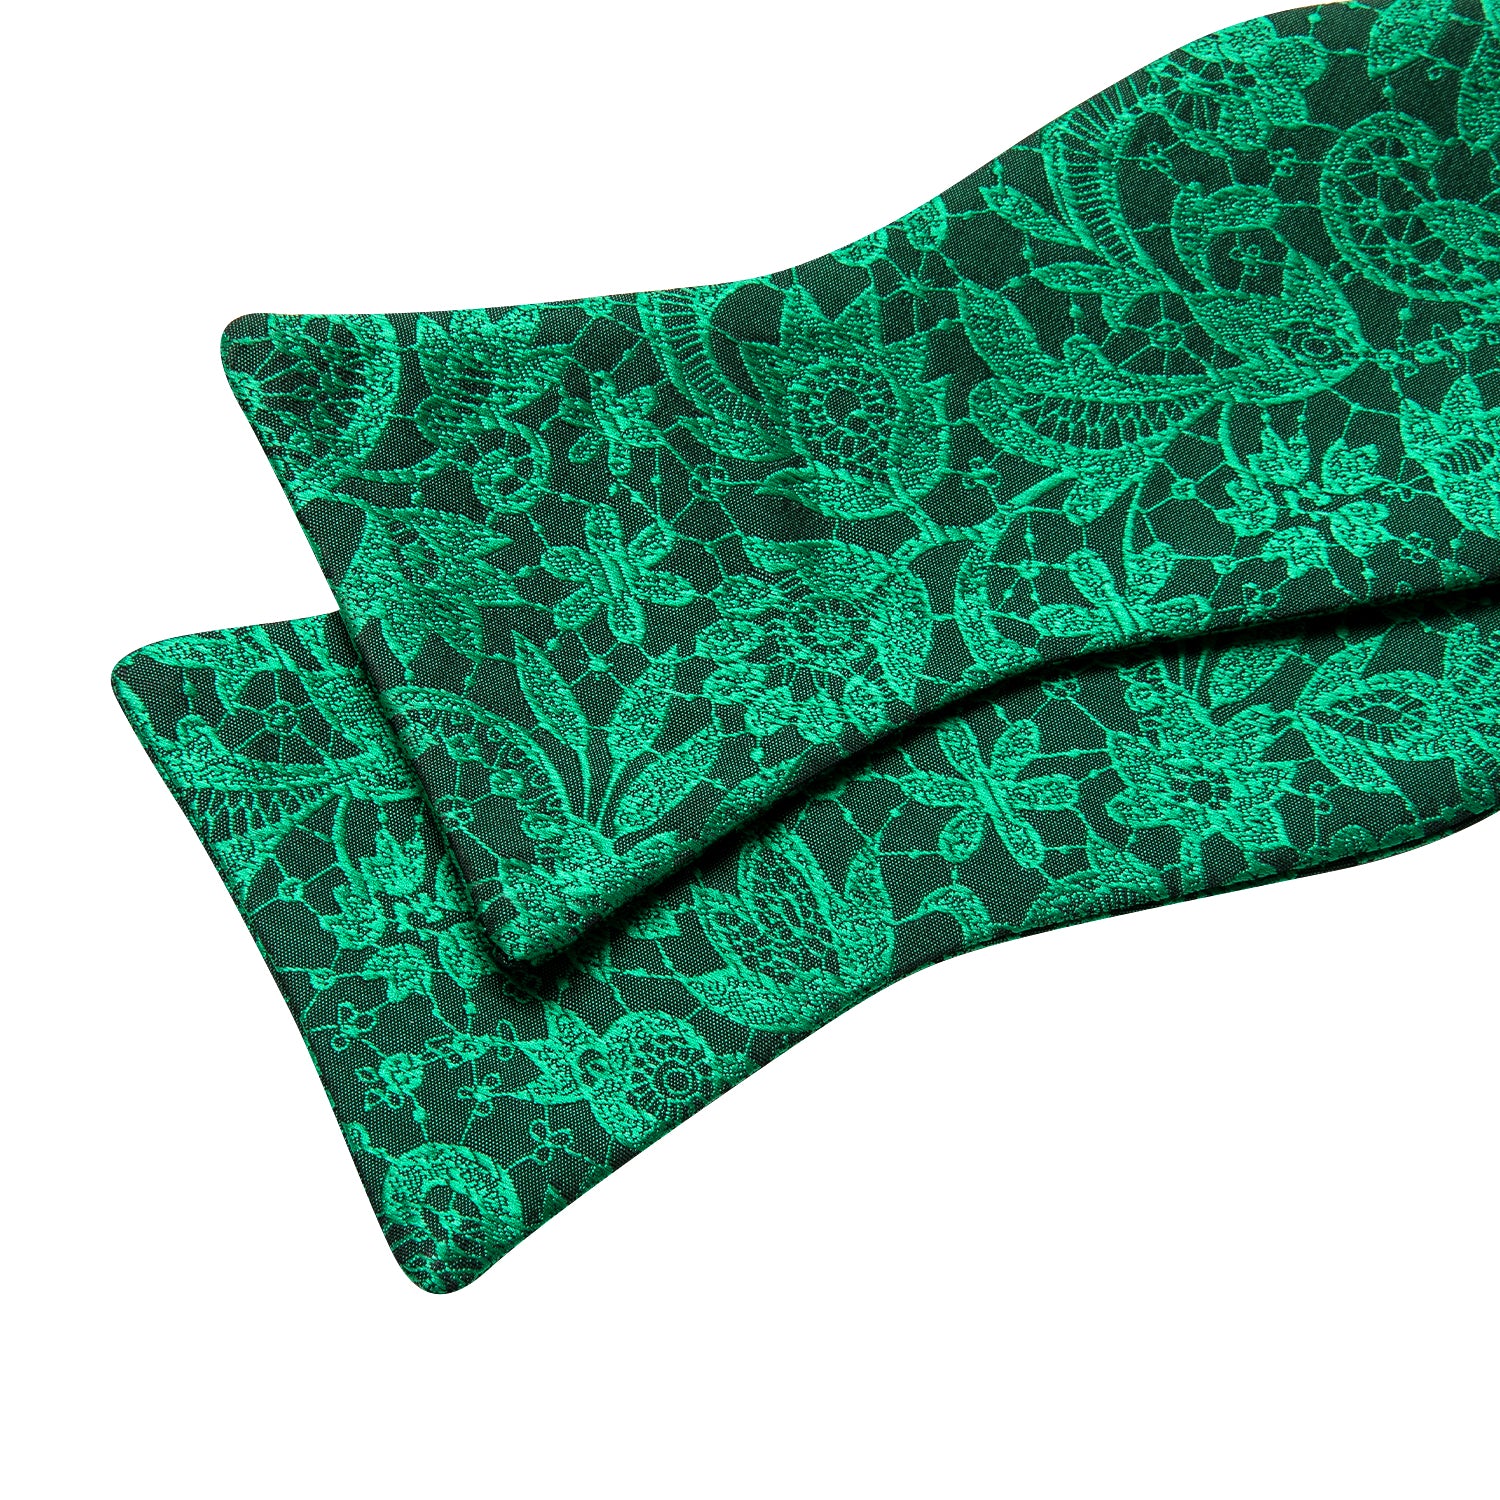 Green Floral Self Tie Bow Tie Hanky Cufflinks Set